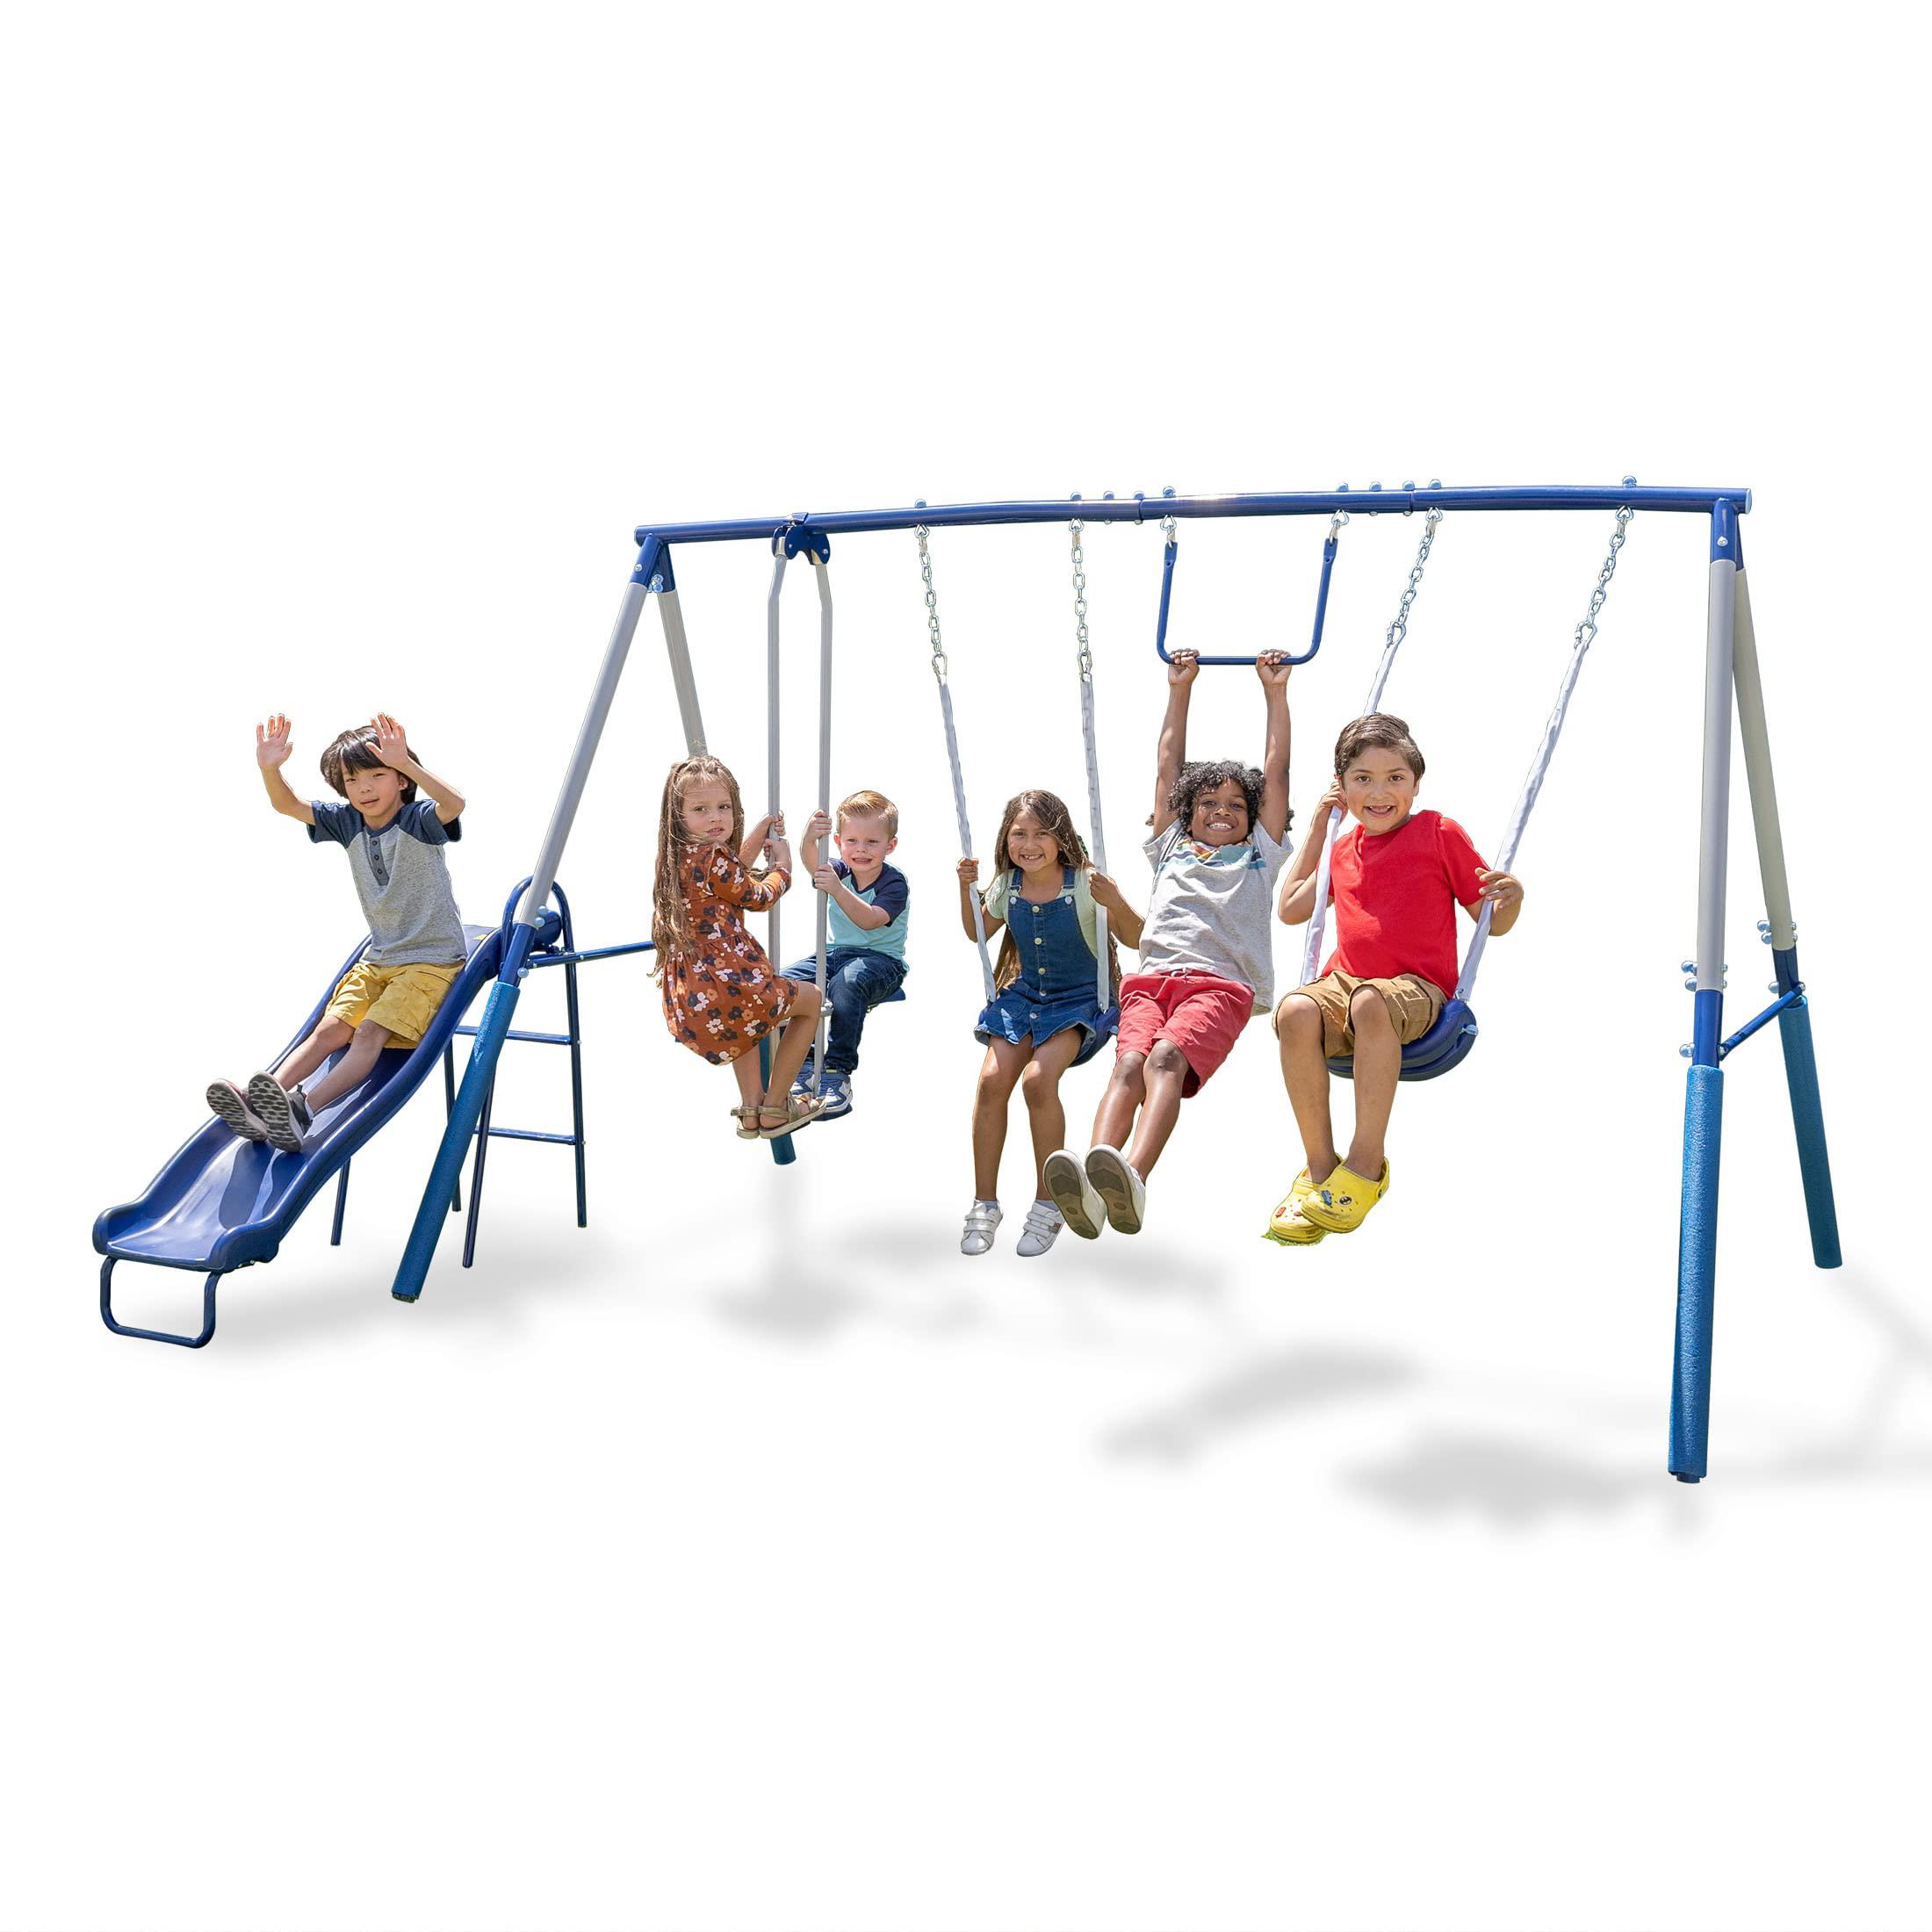 sportspower arcadia swing set - outdoor heavy-duty metal playset for kids multicolor